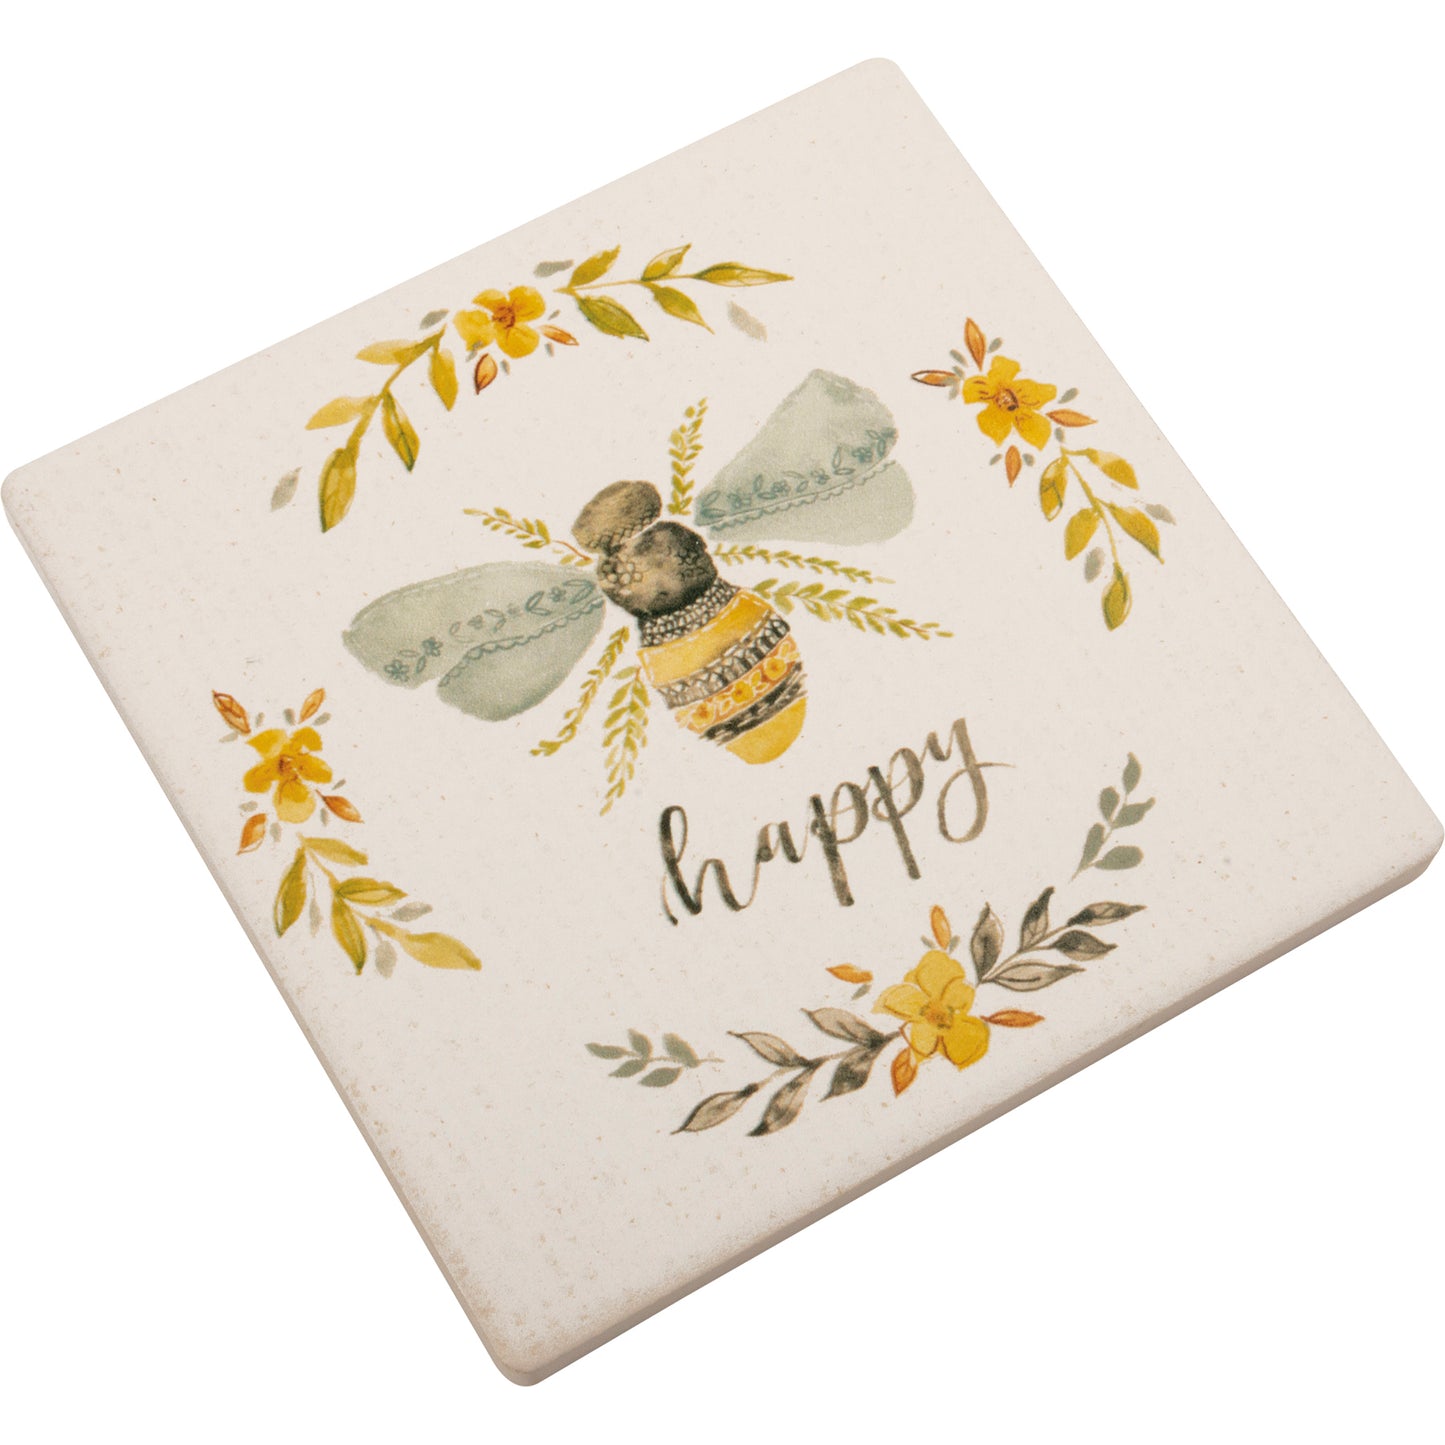 Coaster - "Bee Happy"